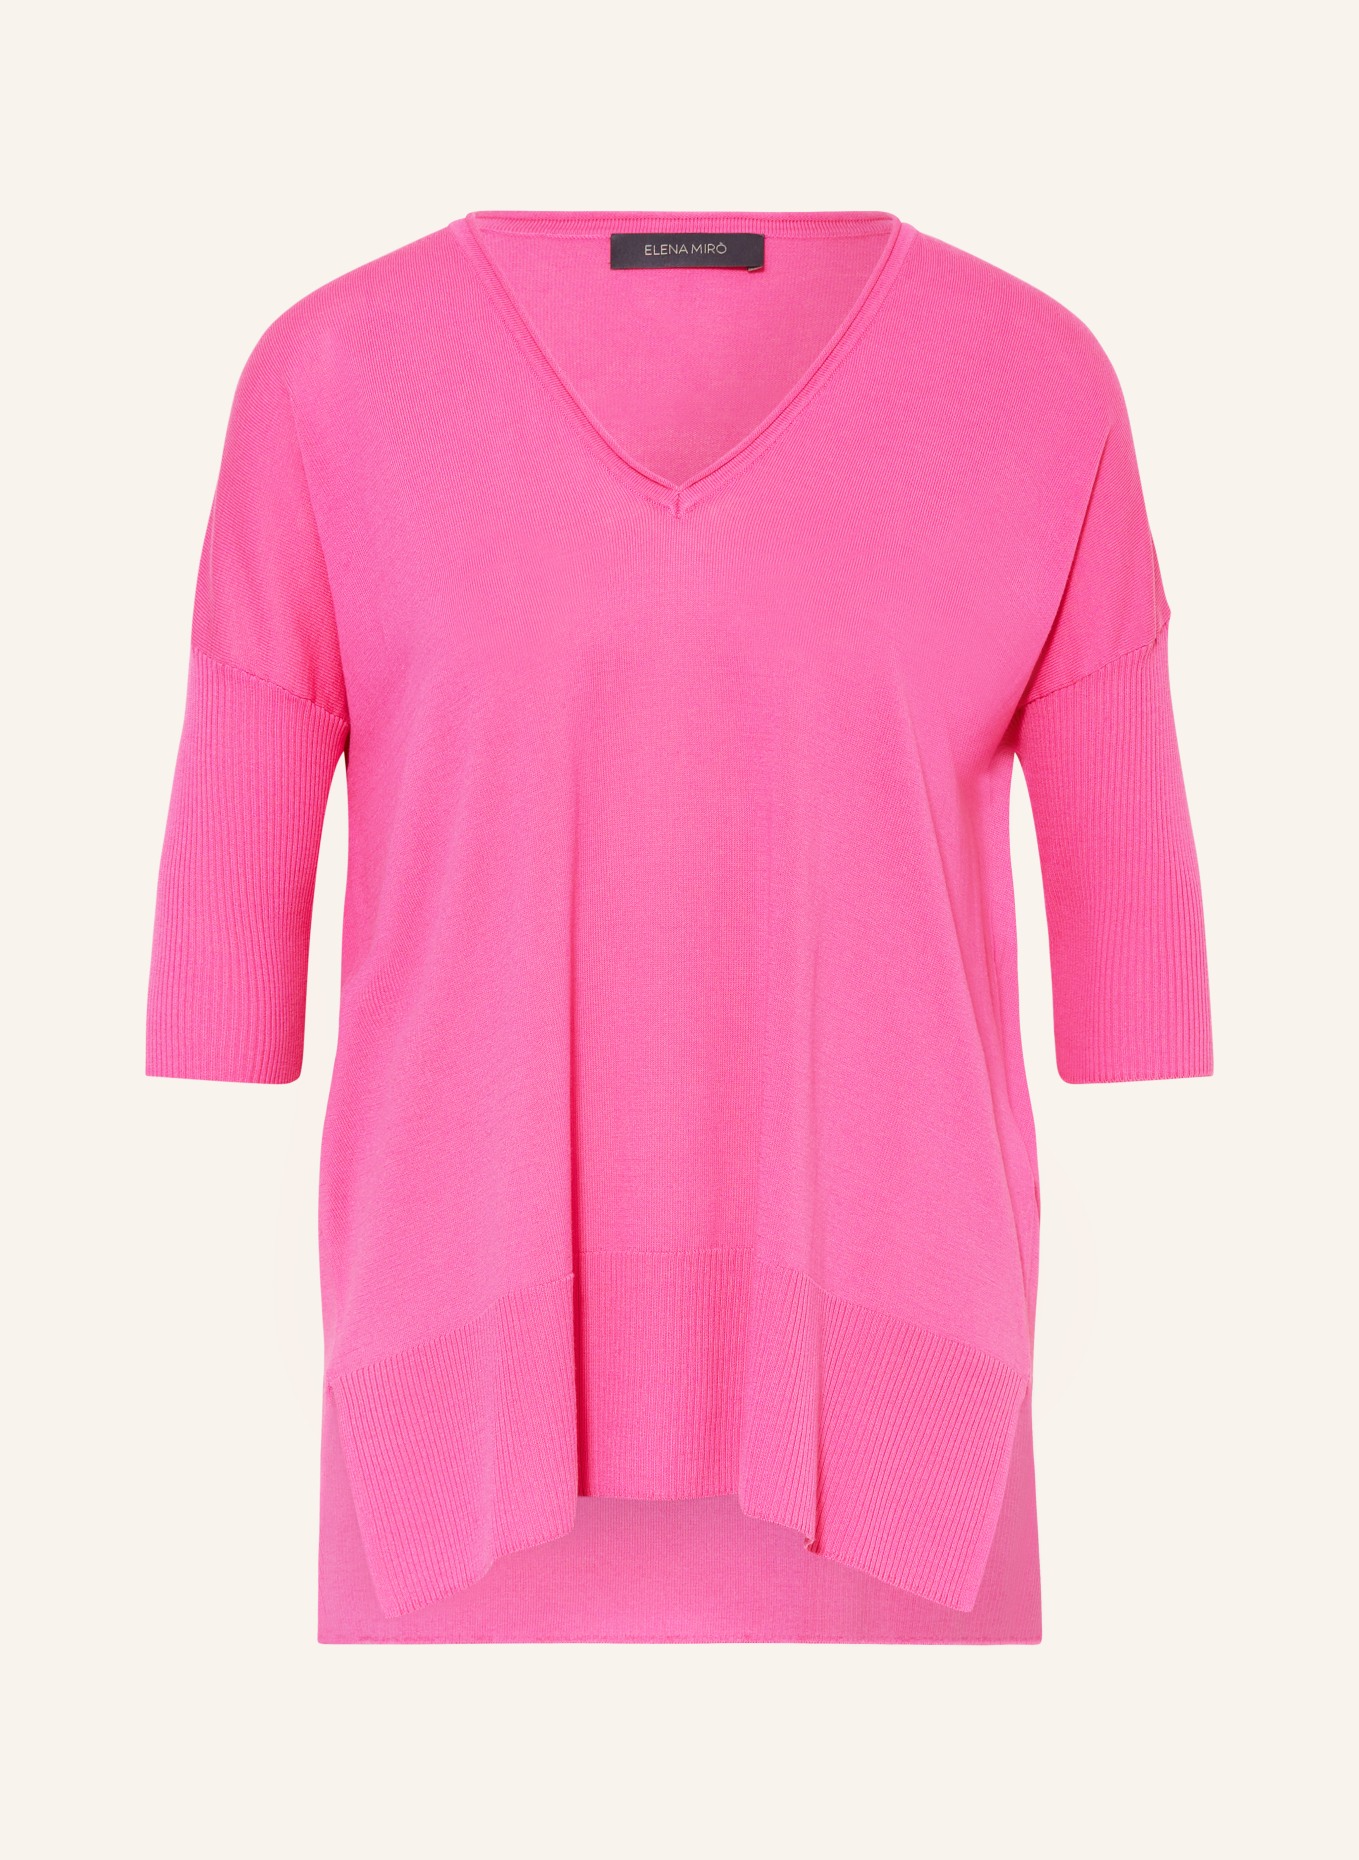 ELENA MIRO Strickshirt, Farbe: PINK (Bild 1)